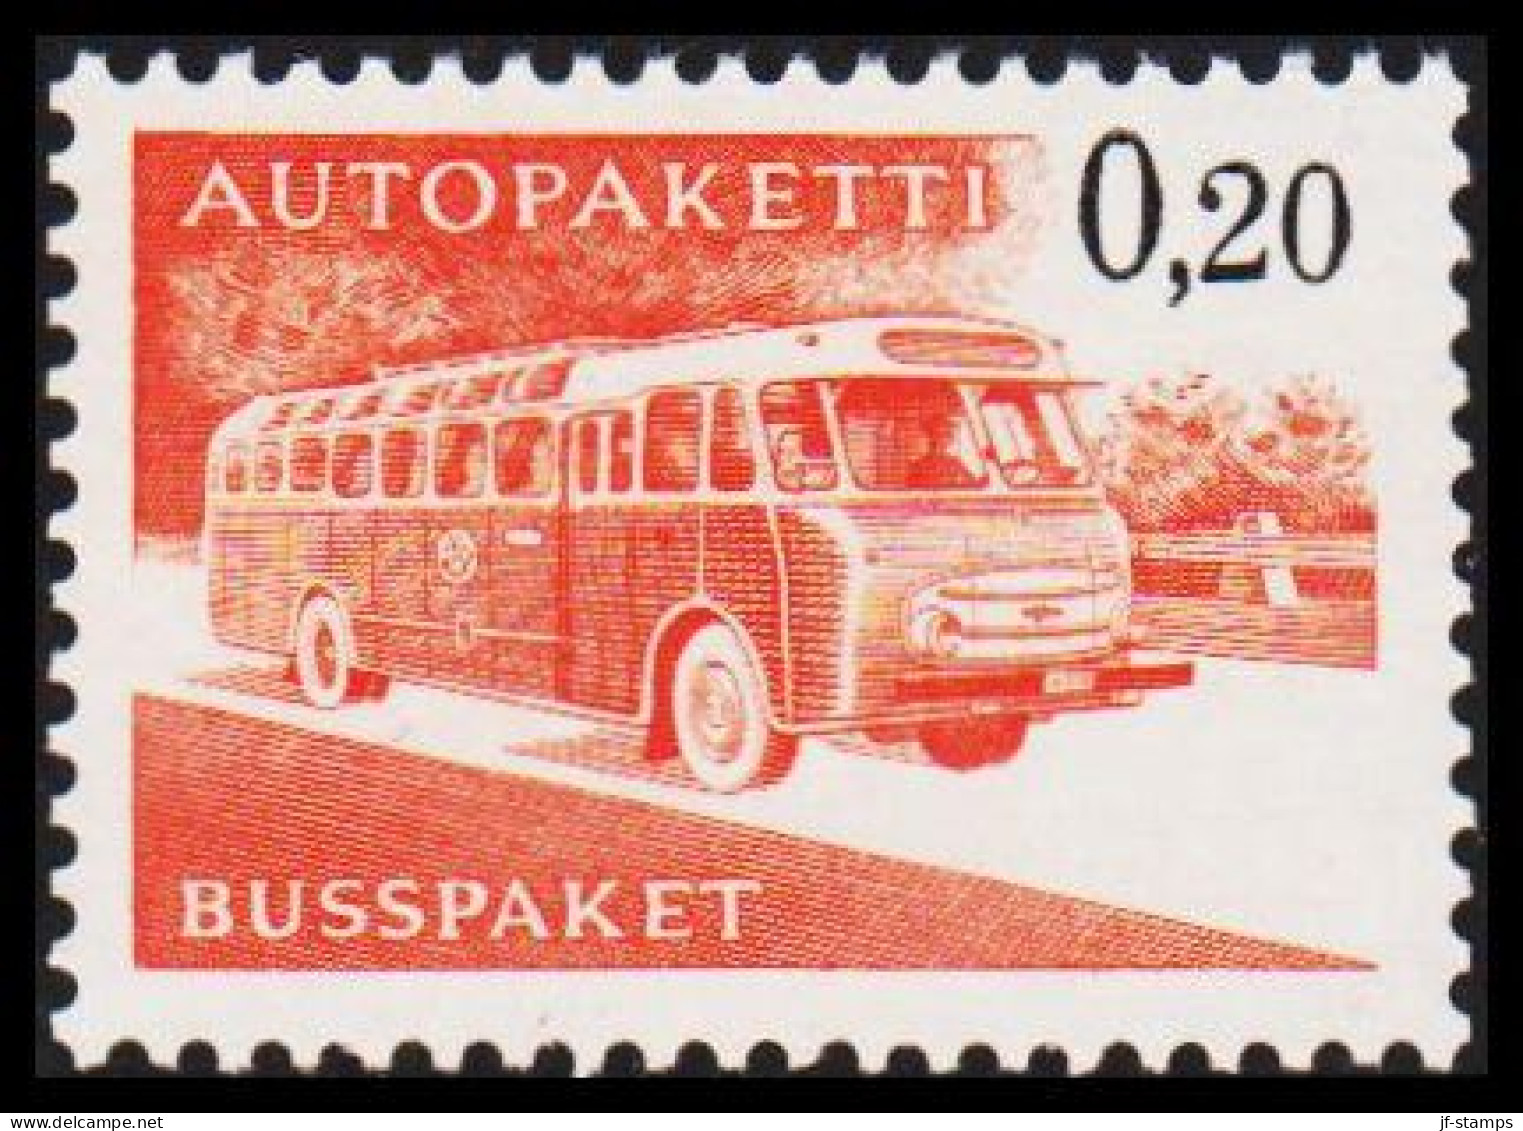 1963-1980. FINLAND. Mail Bus. 0,20 Mk. AUTOPAKETTI - BUSSPAKET Never Hinged. Lumogen. Whit... (Michel AP 11y) - JF535623 - Pacchi Tramite Autobus